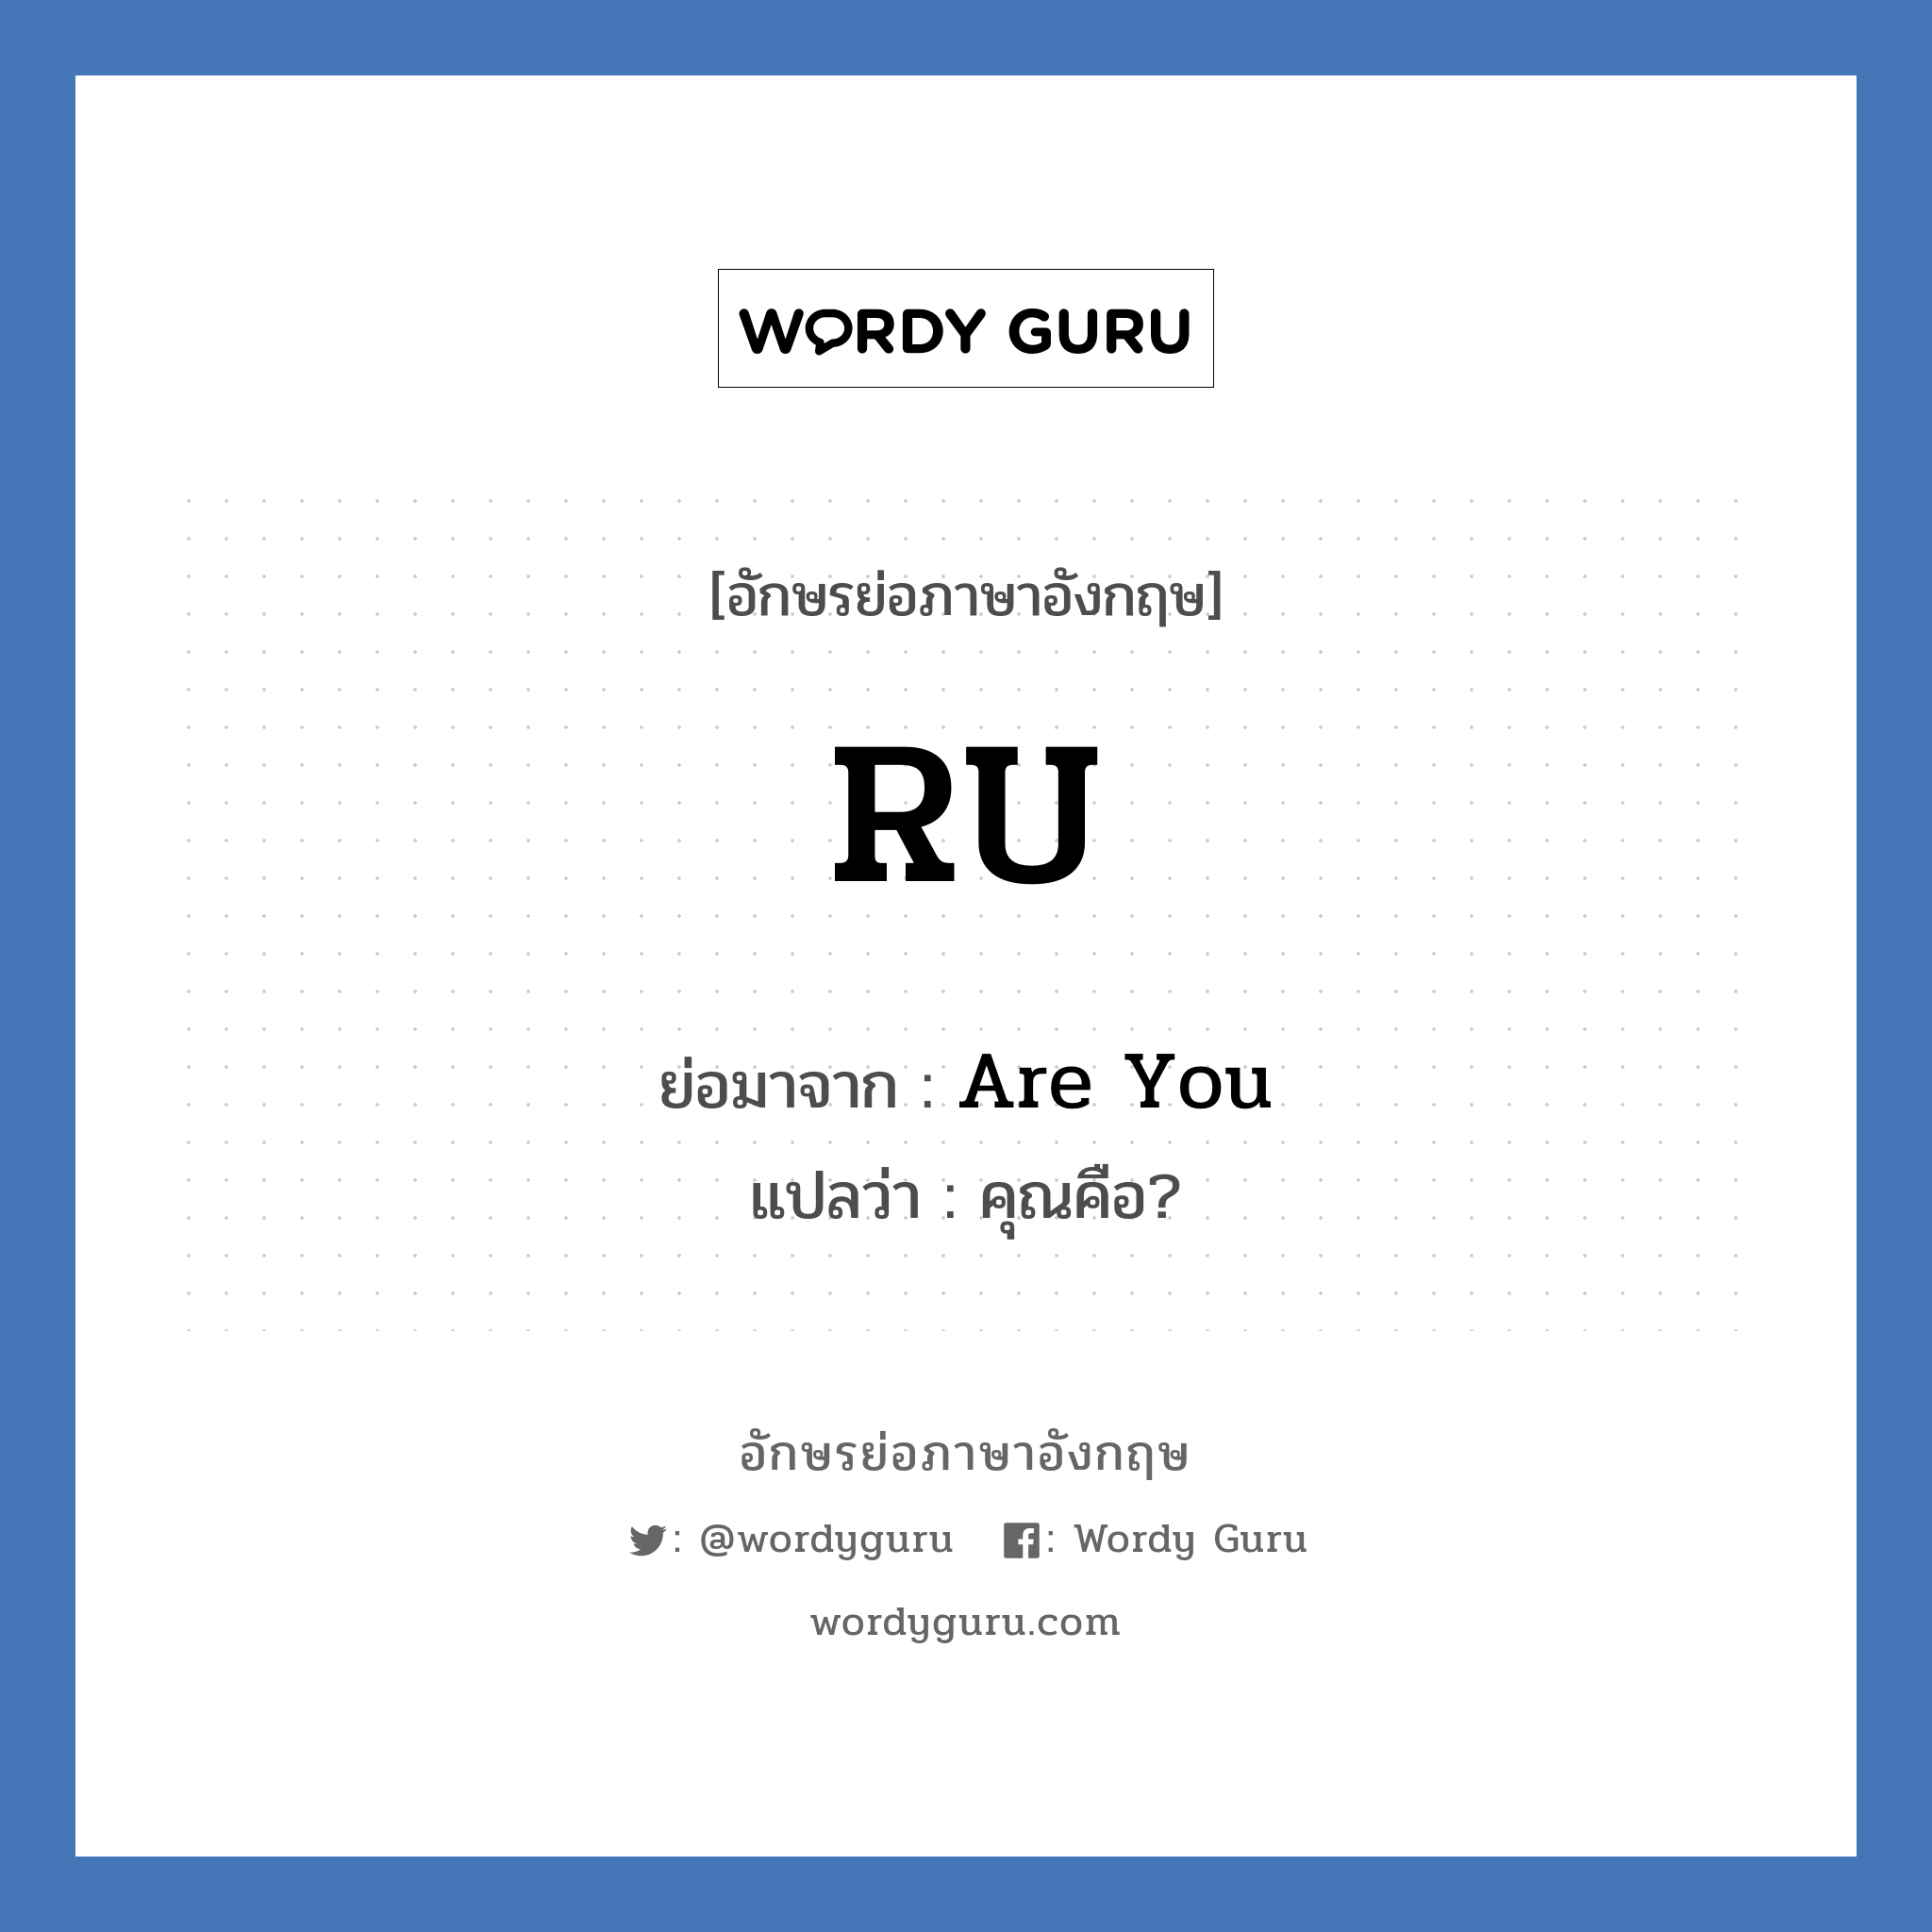 RU ย่อมาจาก? แปลว่า?, อักษรย่อภาษาอังกฤษ RU ย่อมาจาก Are You แปลว่า คุณคือ?